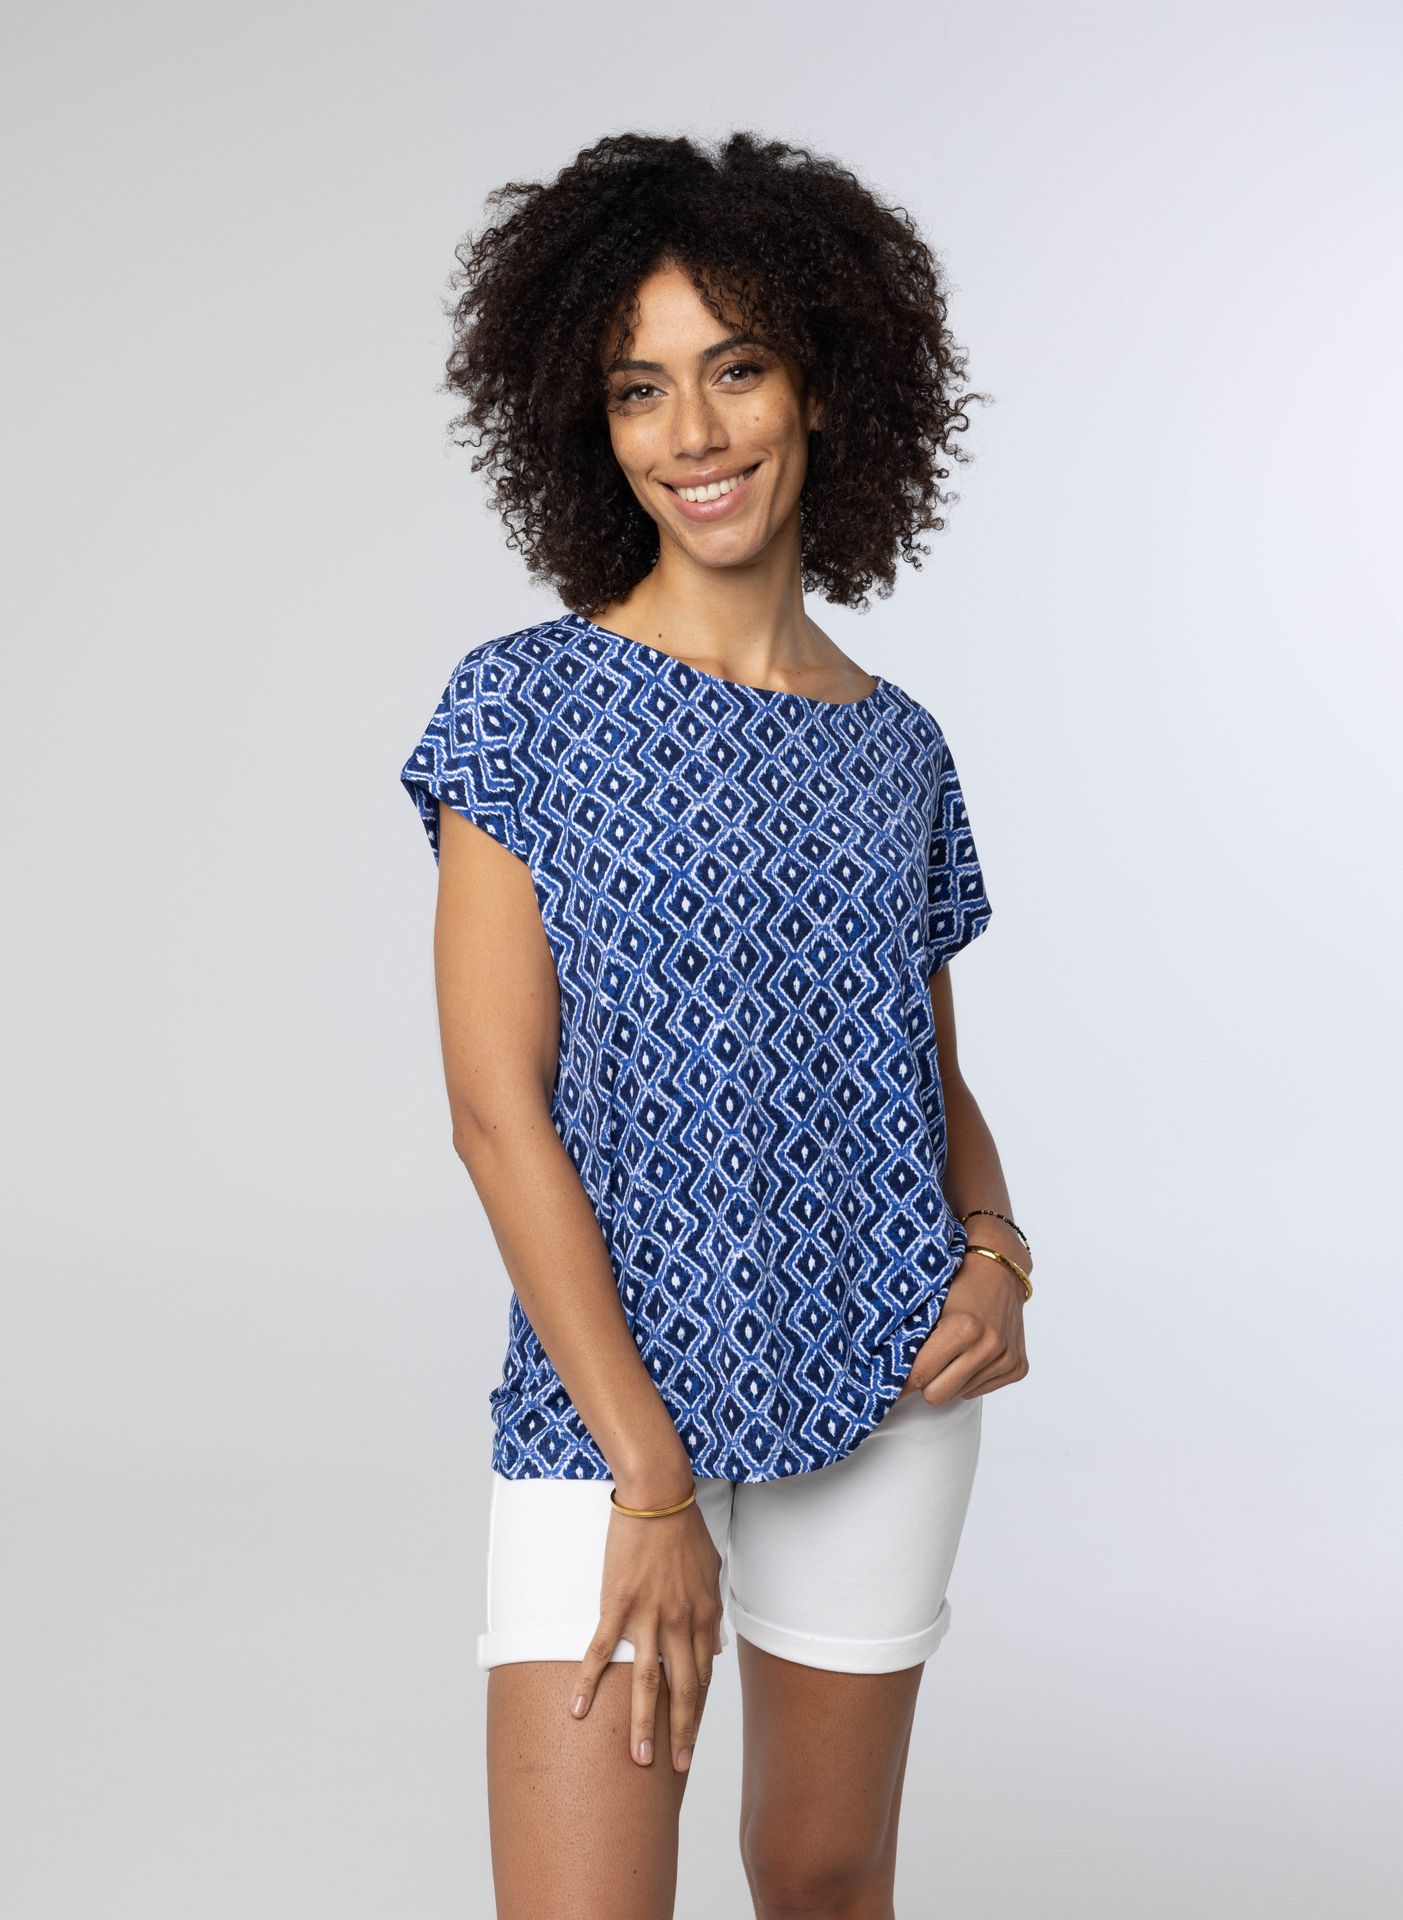 Norah Blauw shirt blue multicolor 213494-420-48